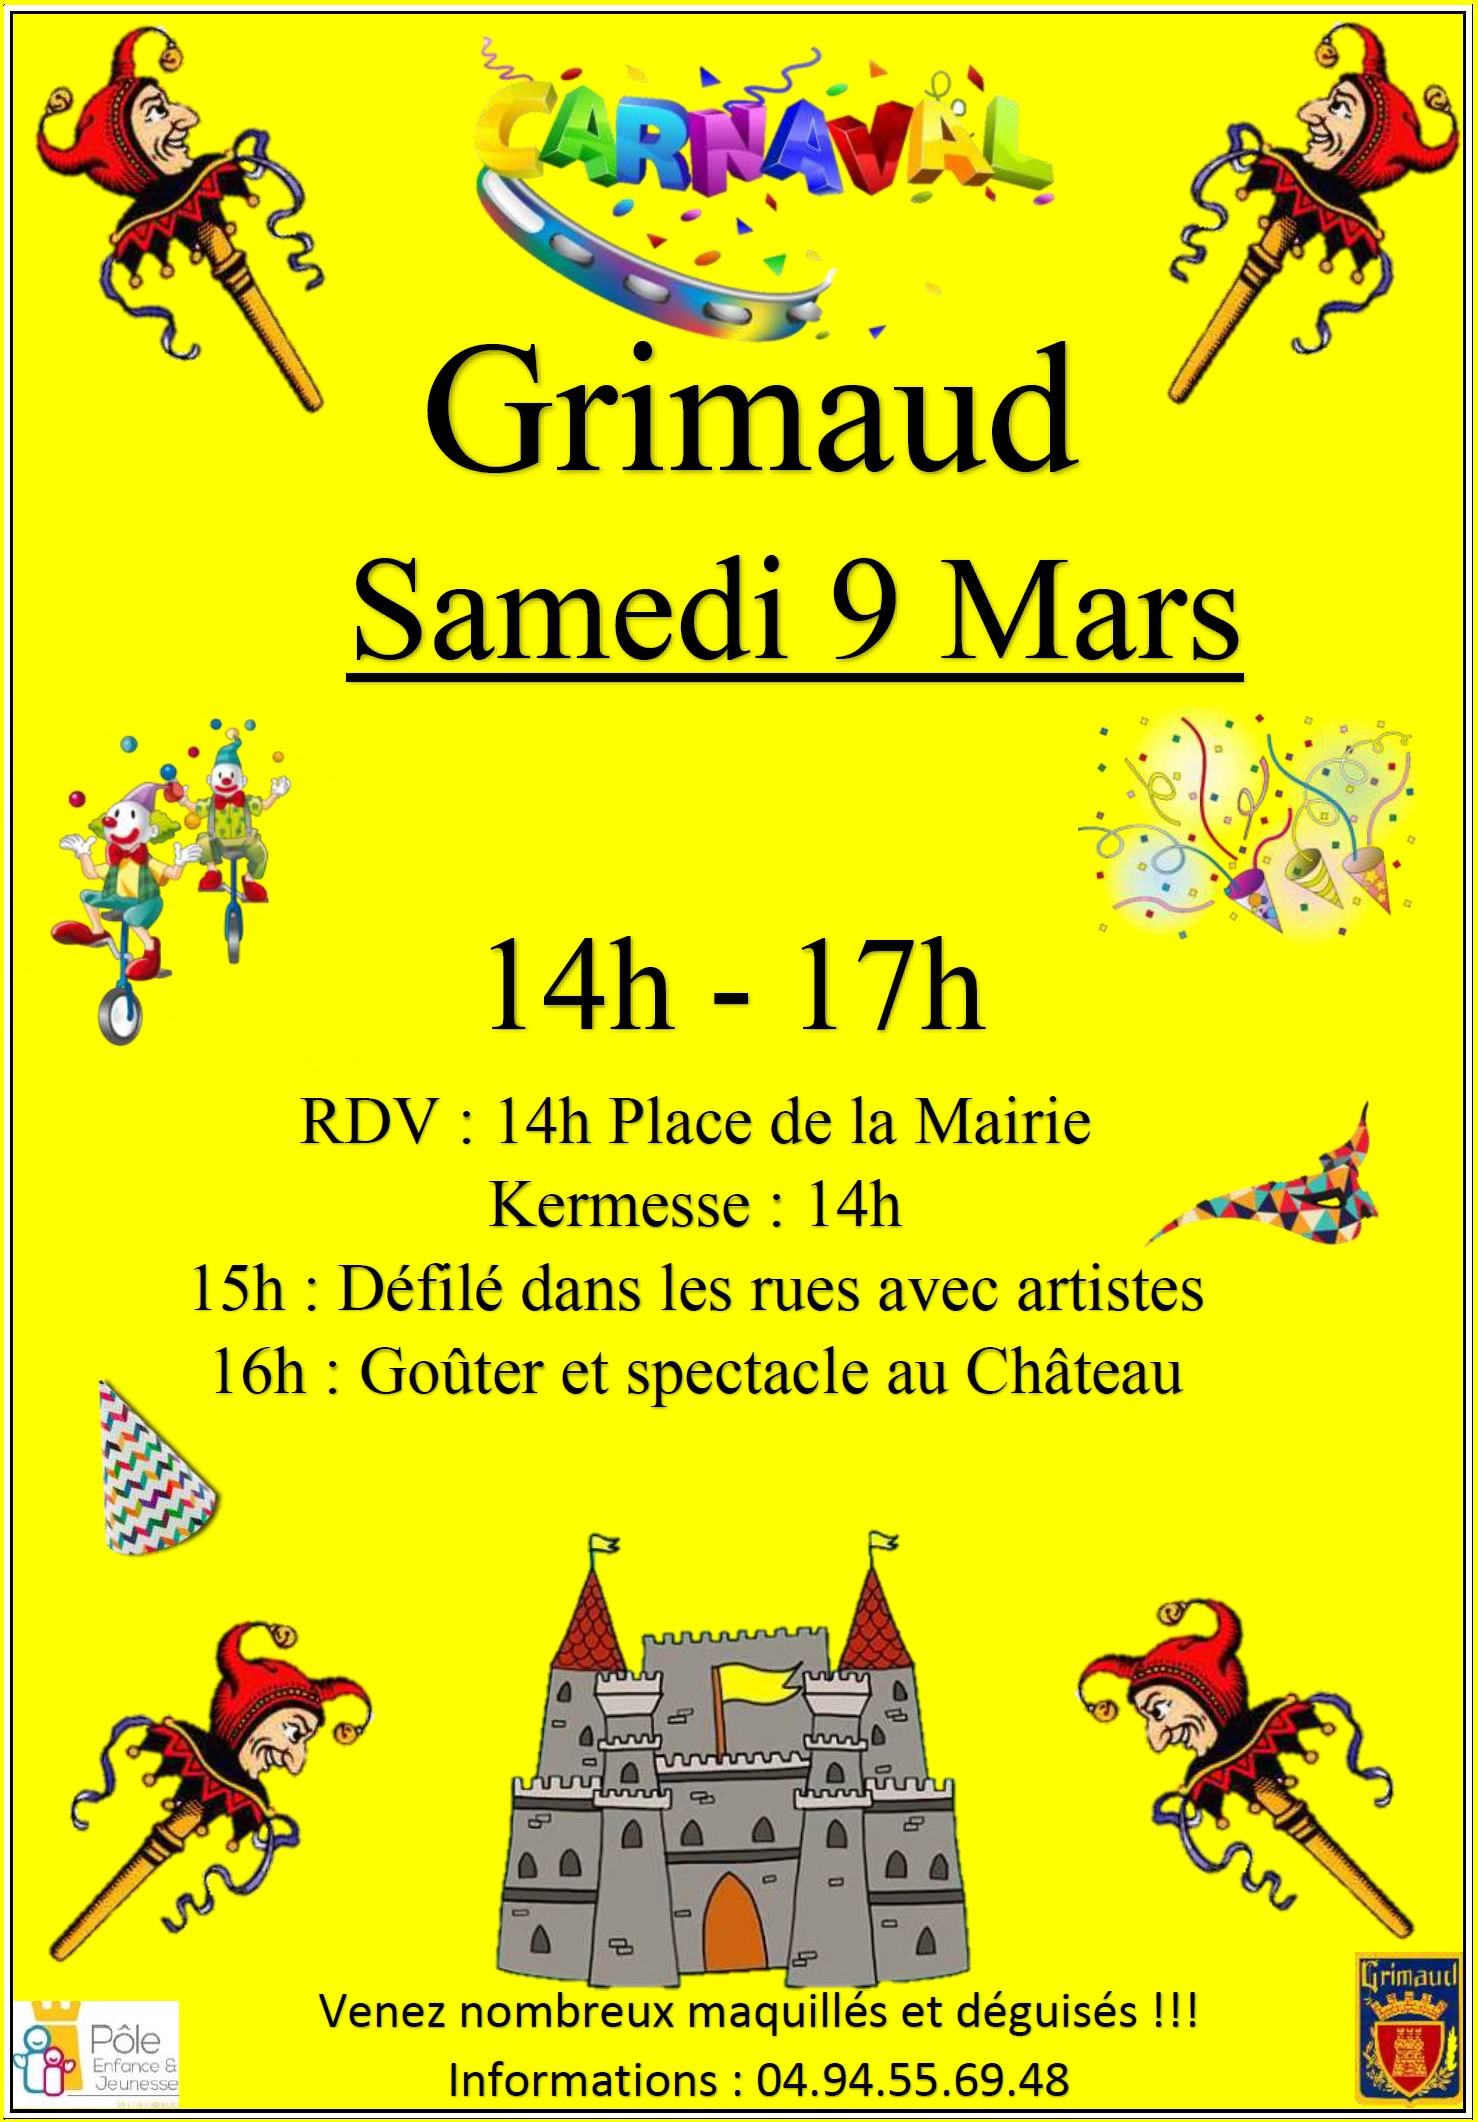 Samedi 9 mars 2019 : Carnaval de Grimaud 